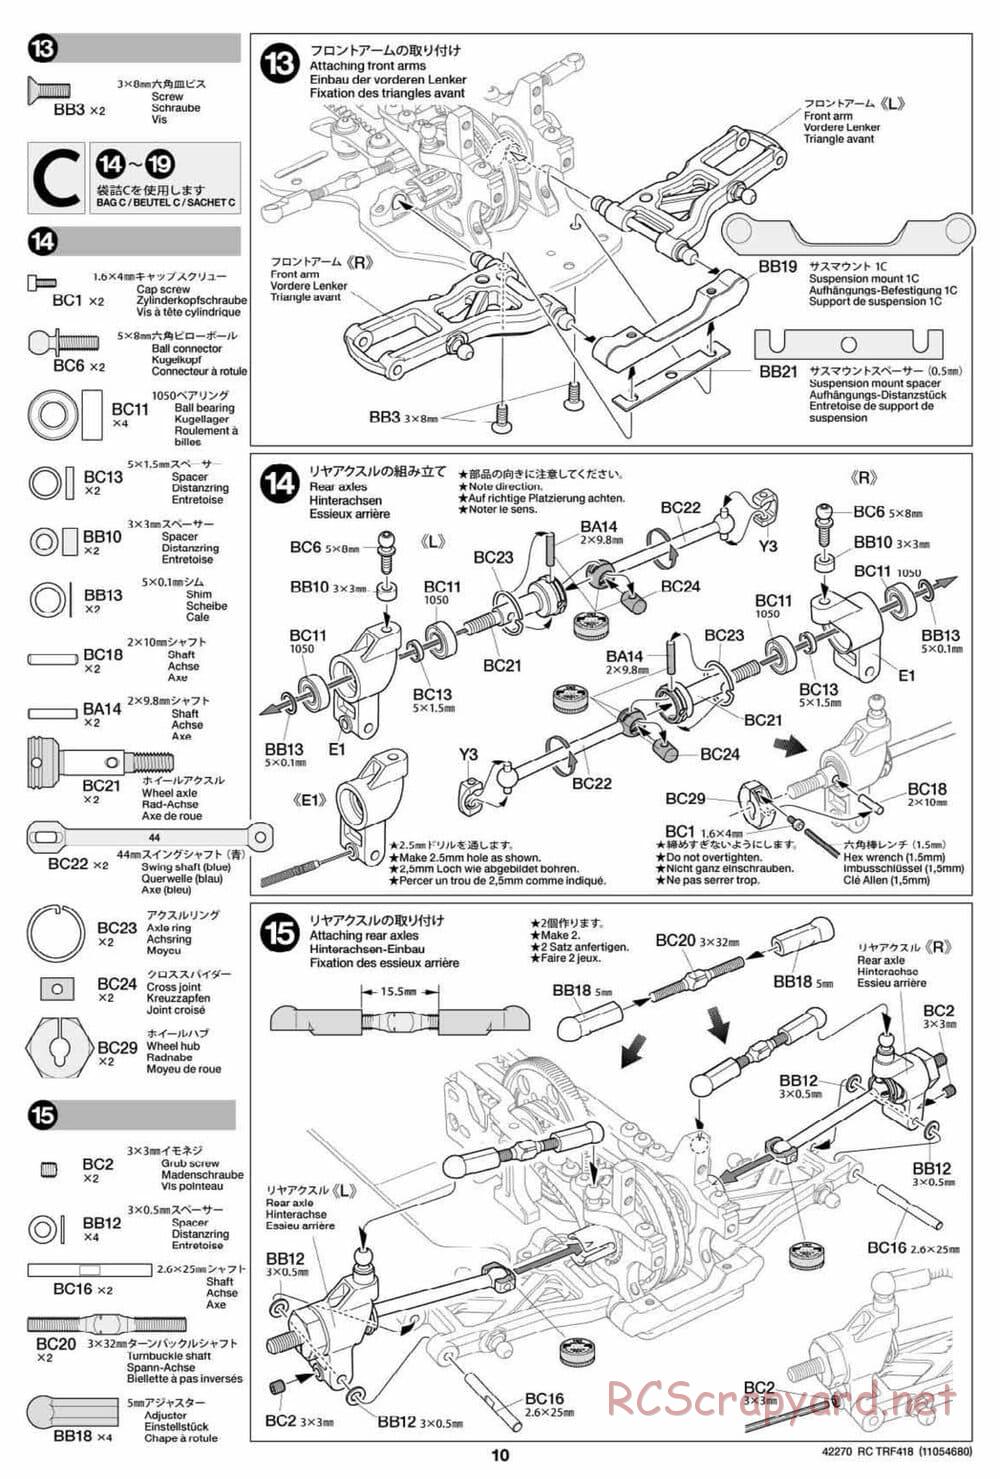 Tamiya - TRF418 Chassis - Manual - Page 10